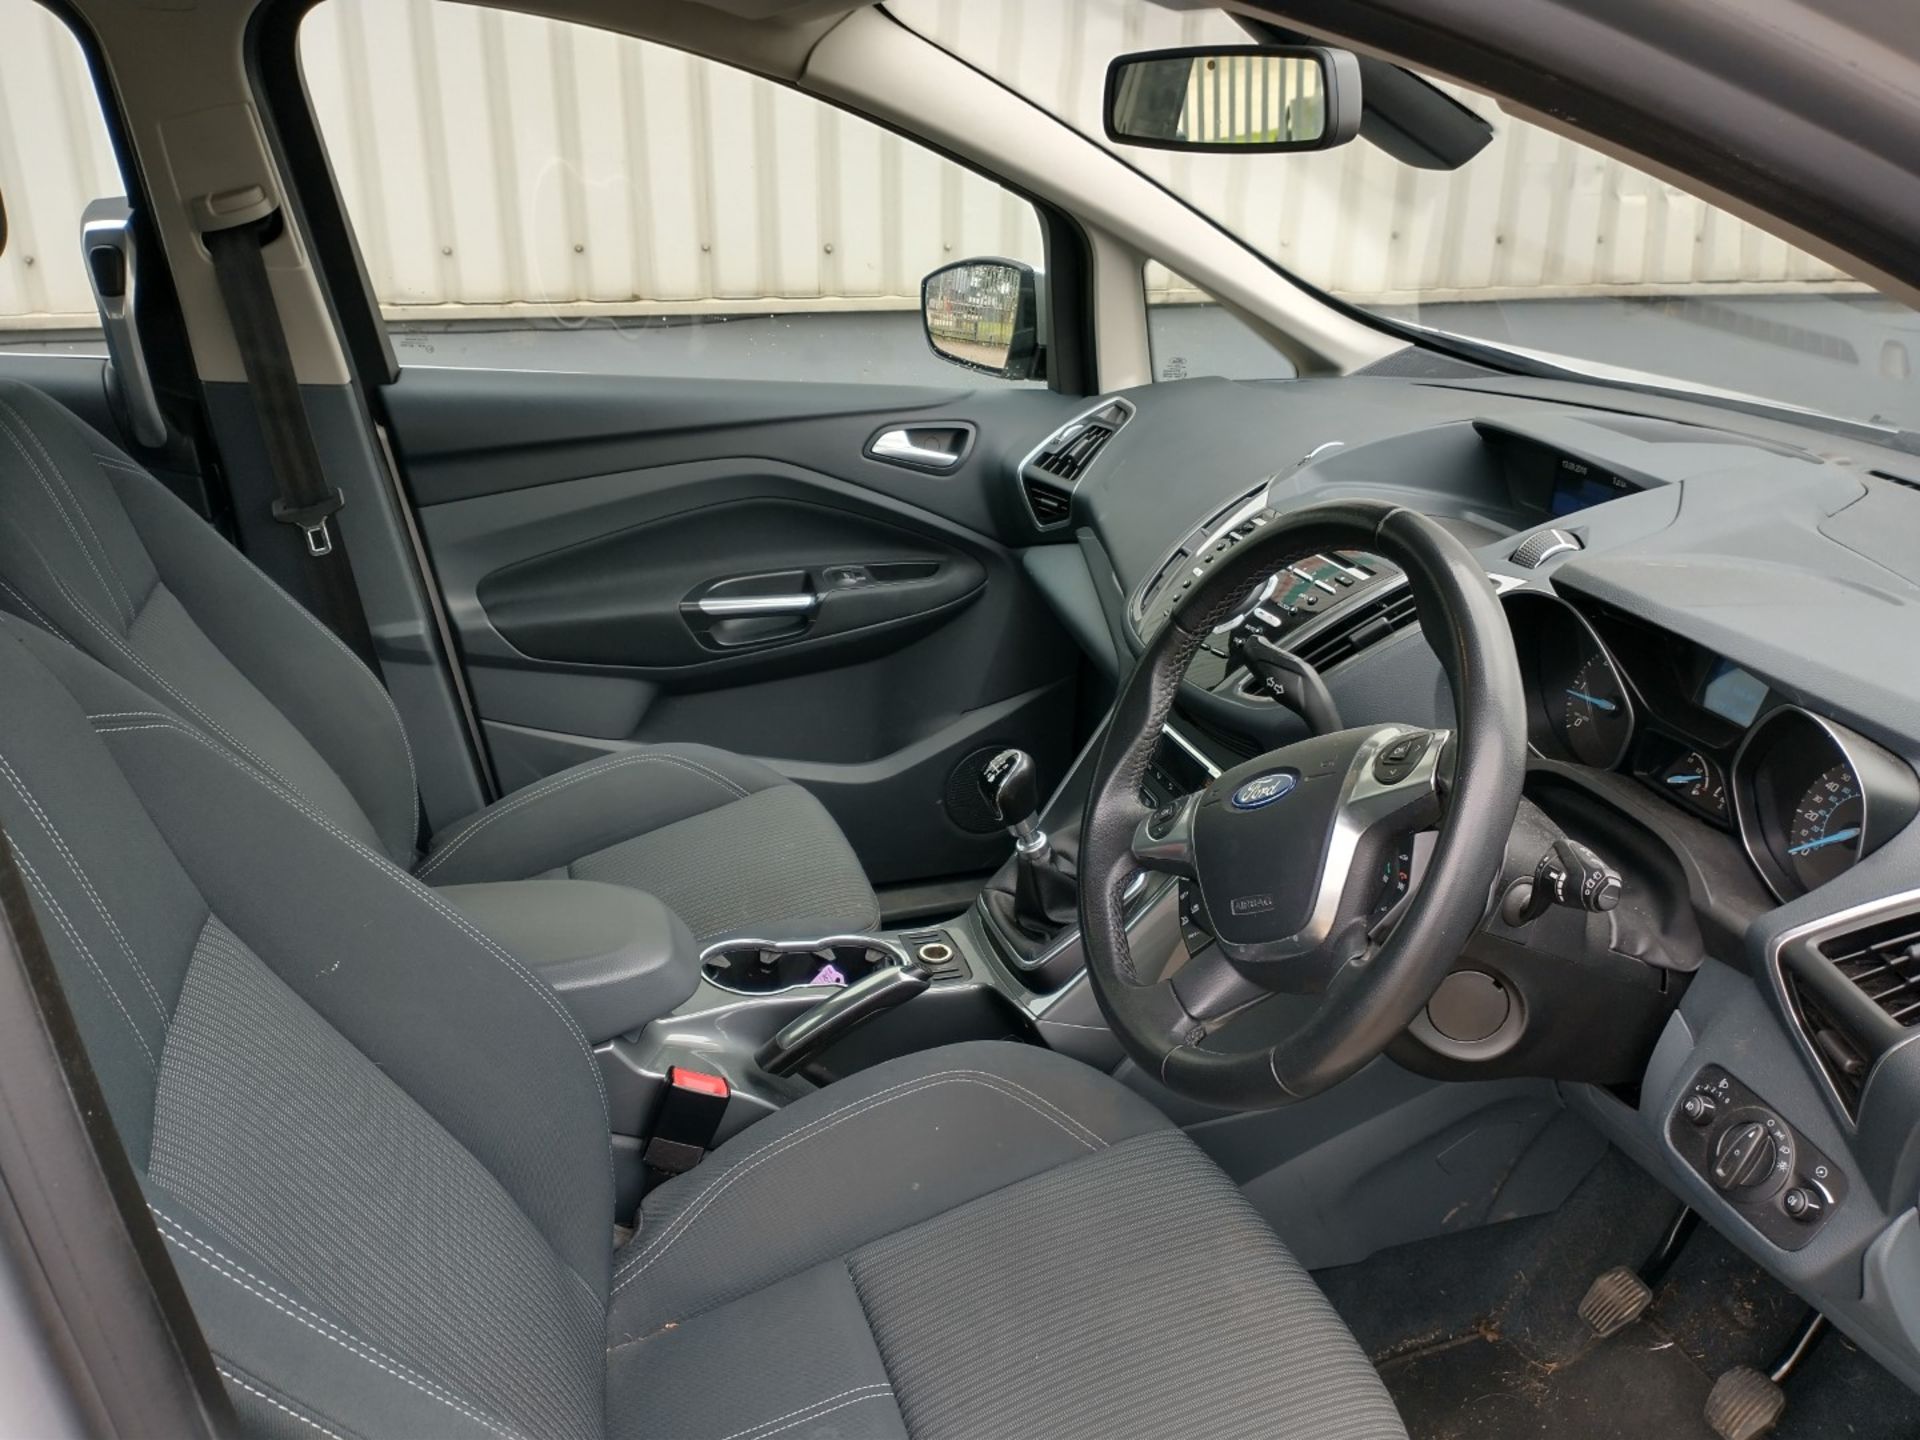 2012 Ford Grand C-Max Titanium Tdci 115 7 Seat MPV - CL505 - Ref: VVS0002 - NO VAT ON THE HAMMER - L - Image 9 of 19